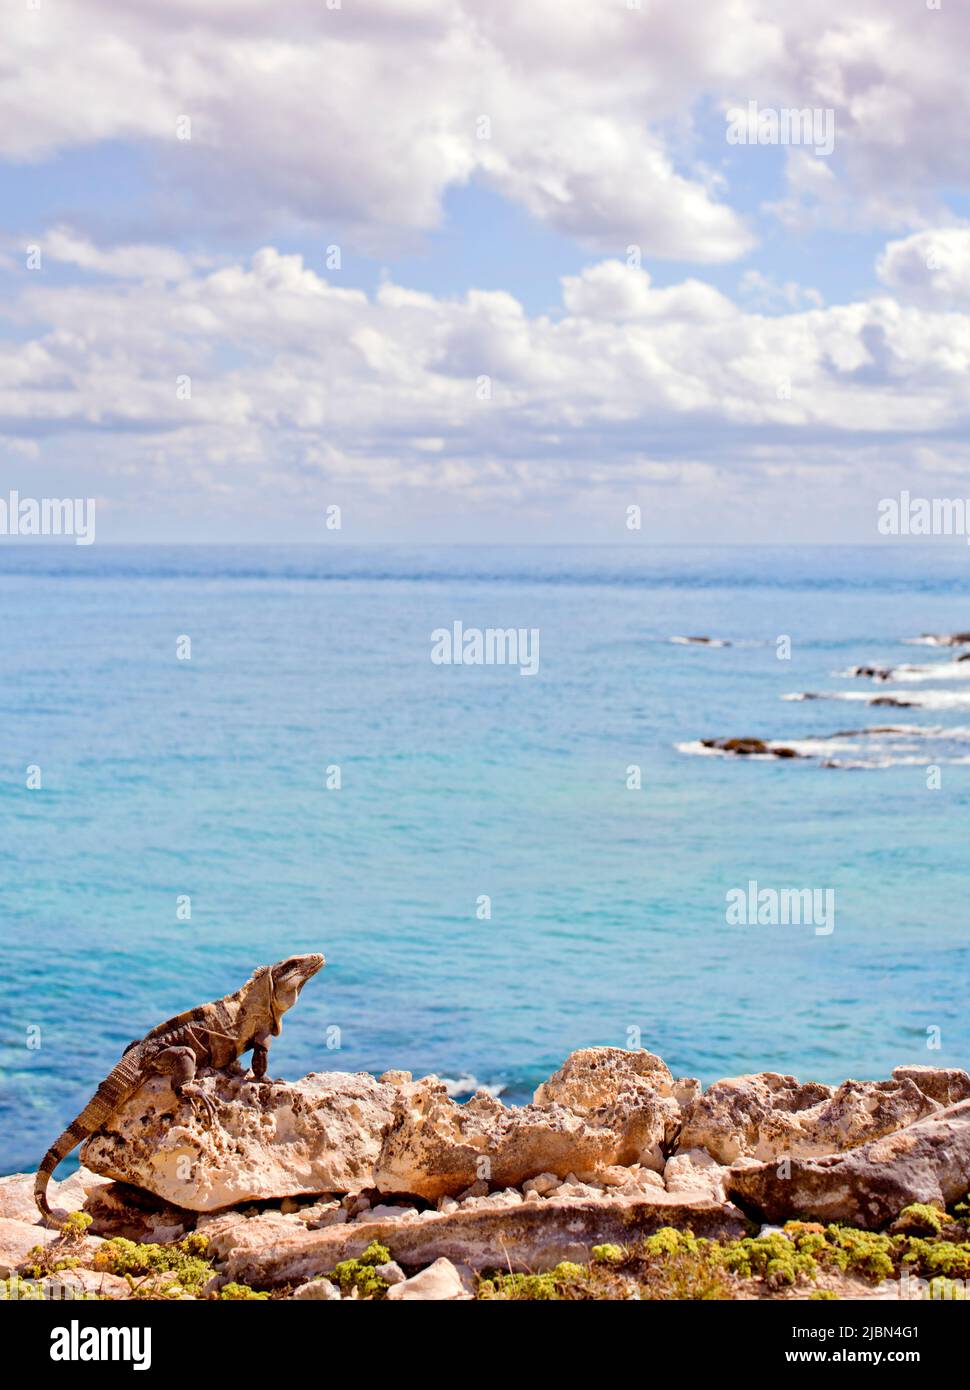 Una iguana descansa en el sol. Isla Mujeres, Quintana Roo, México. Foto de stock